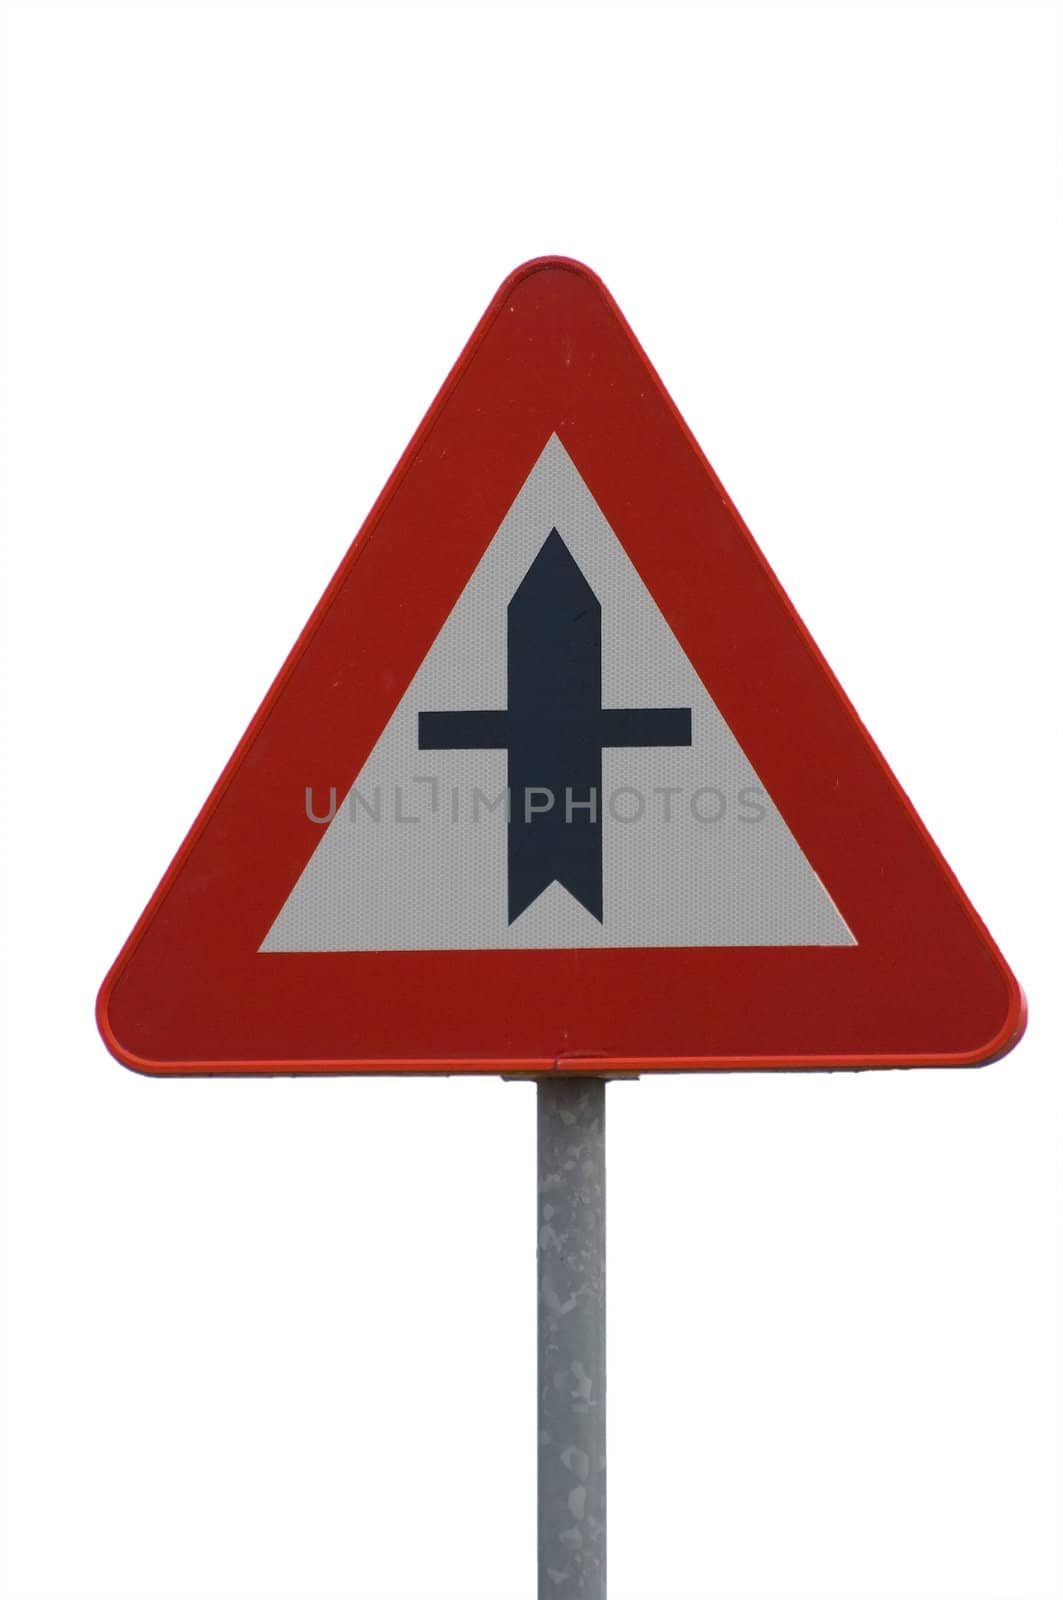 Dutch traffic sign, priority crossing